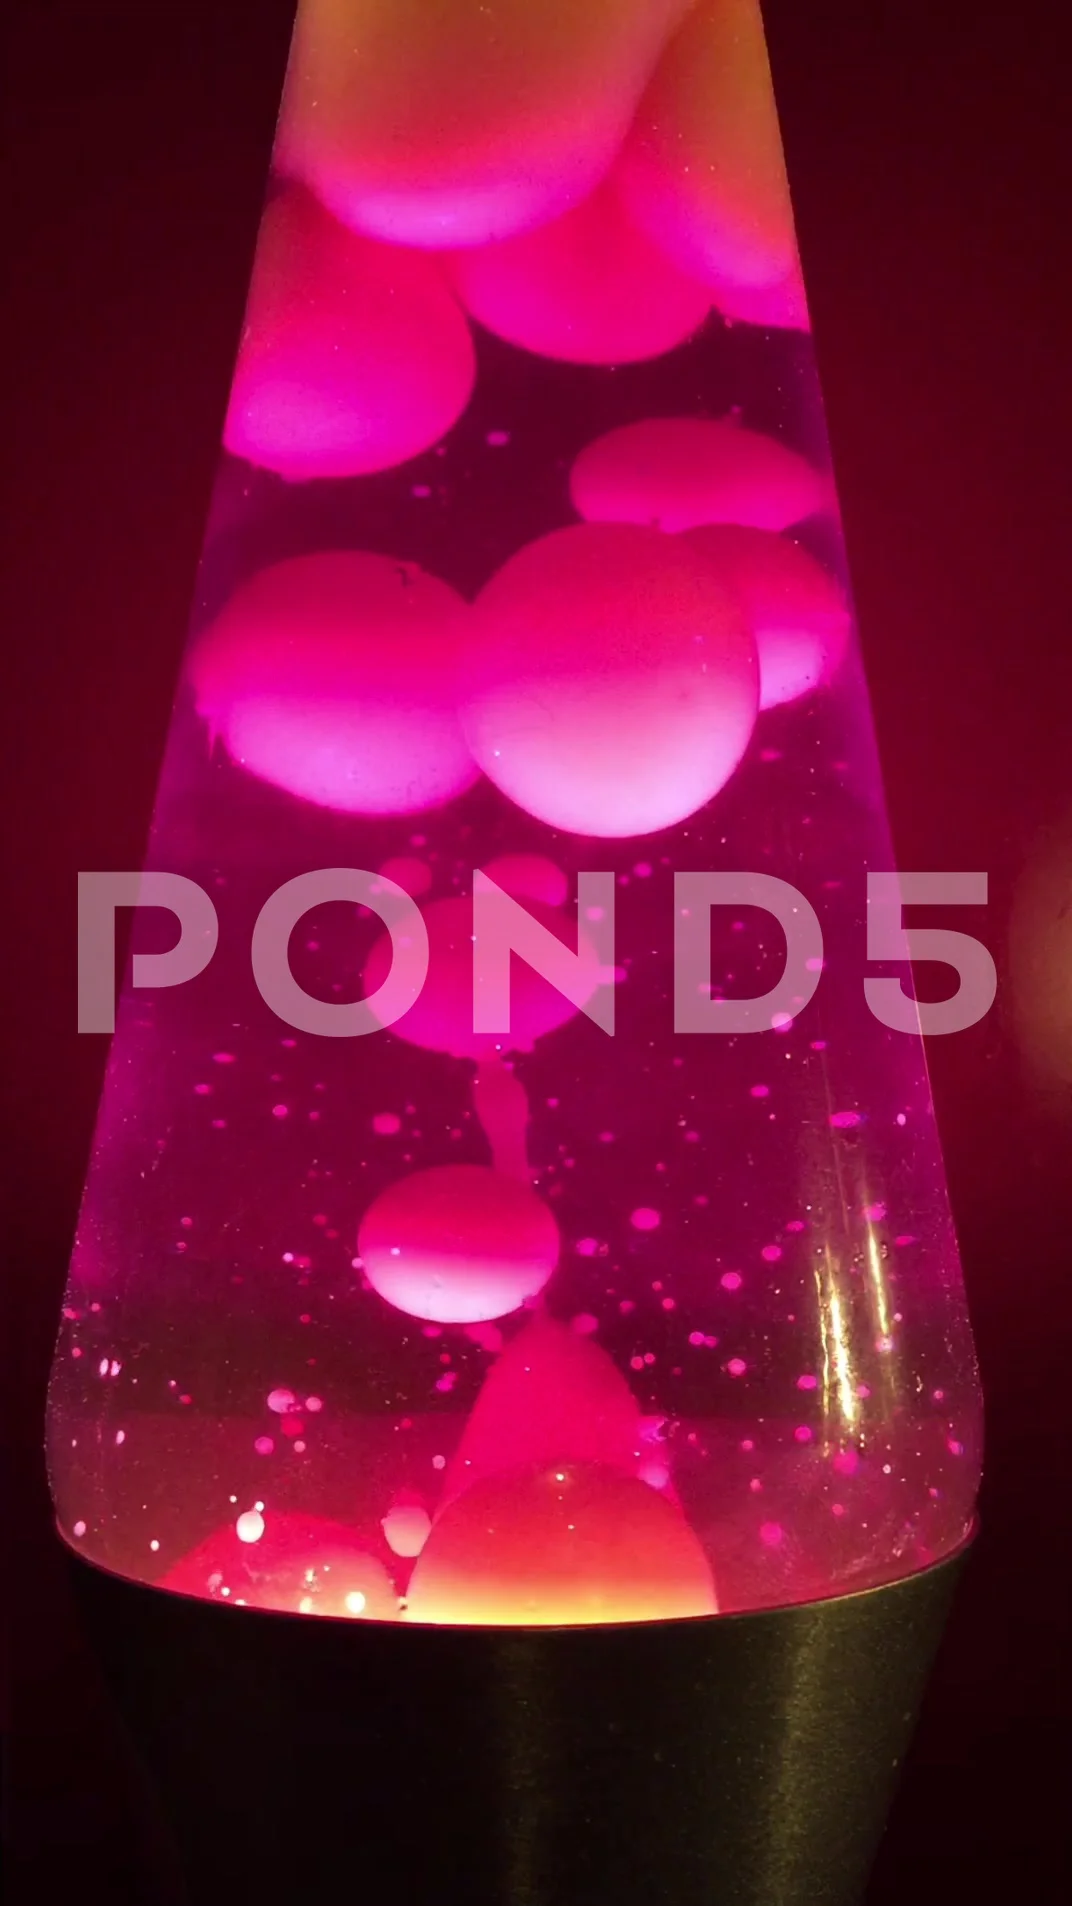 Lavalampen Höhe 45cm Lavaleuchte mit pinker Lava Dekorative LavalampeJenny LA551907 in pink mit transparenter Flüssigkeit 